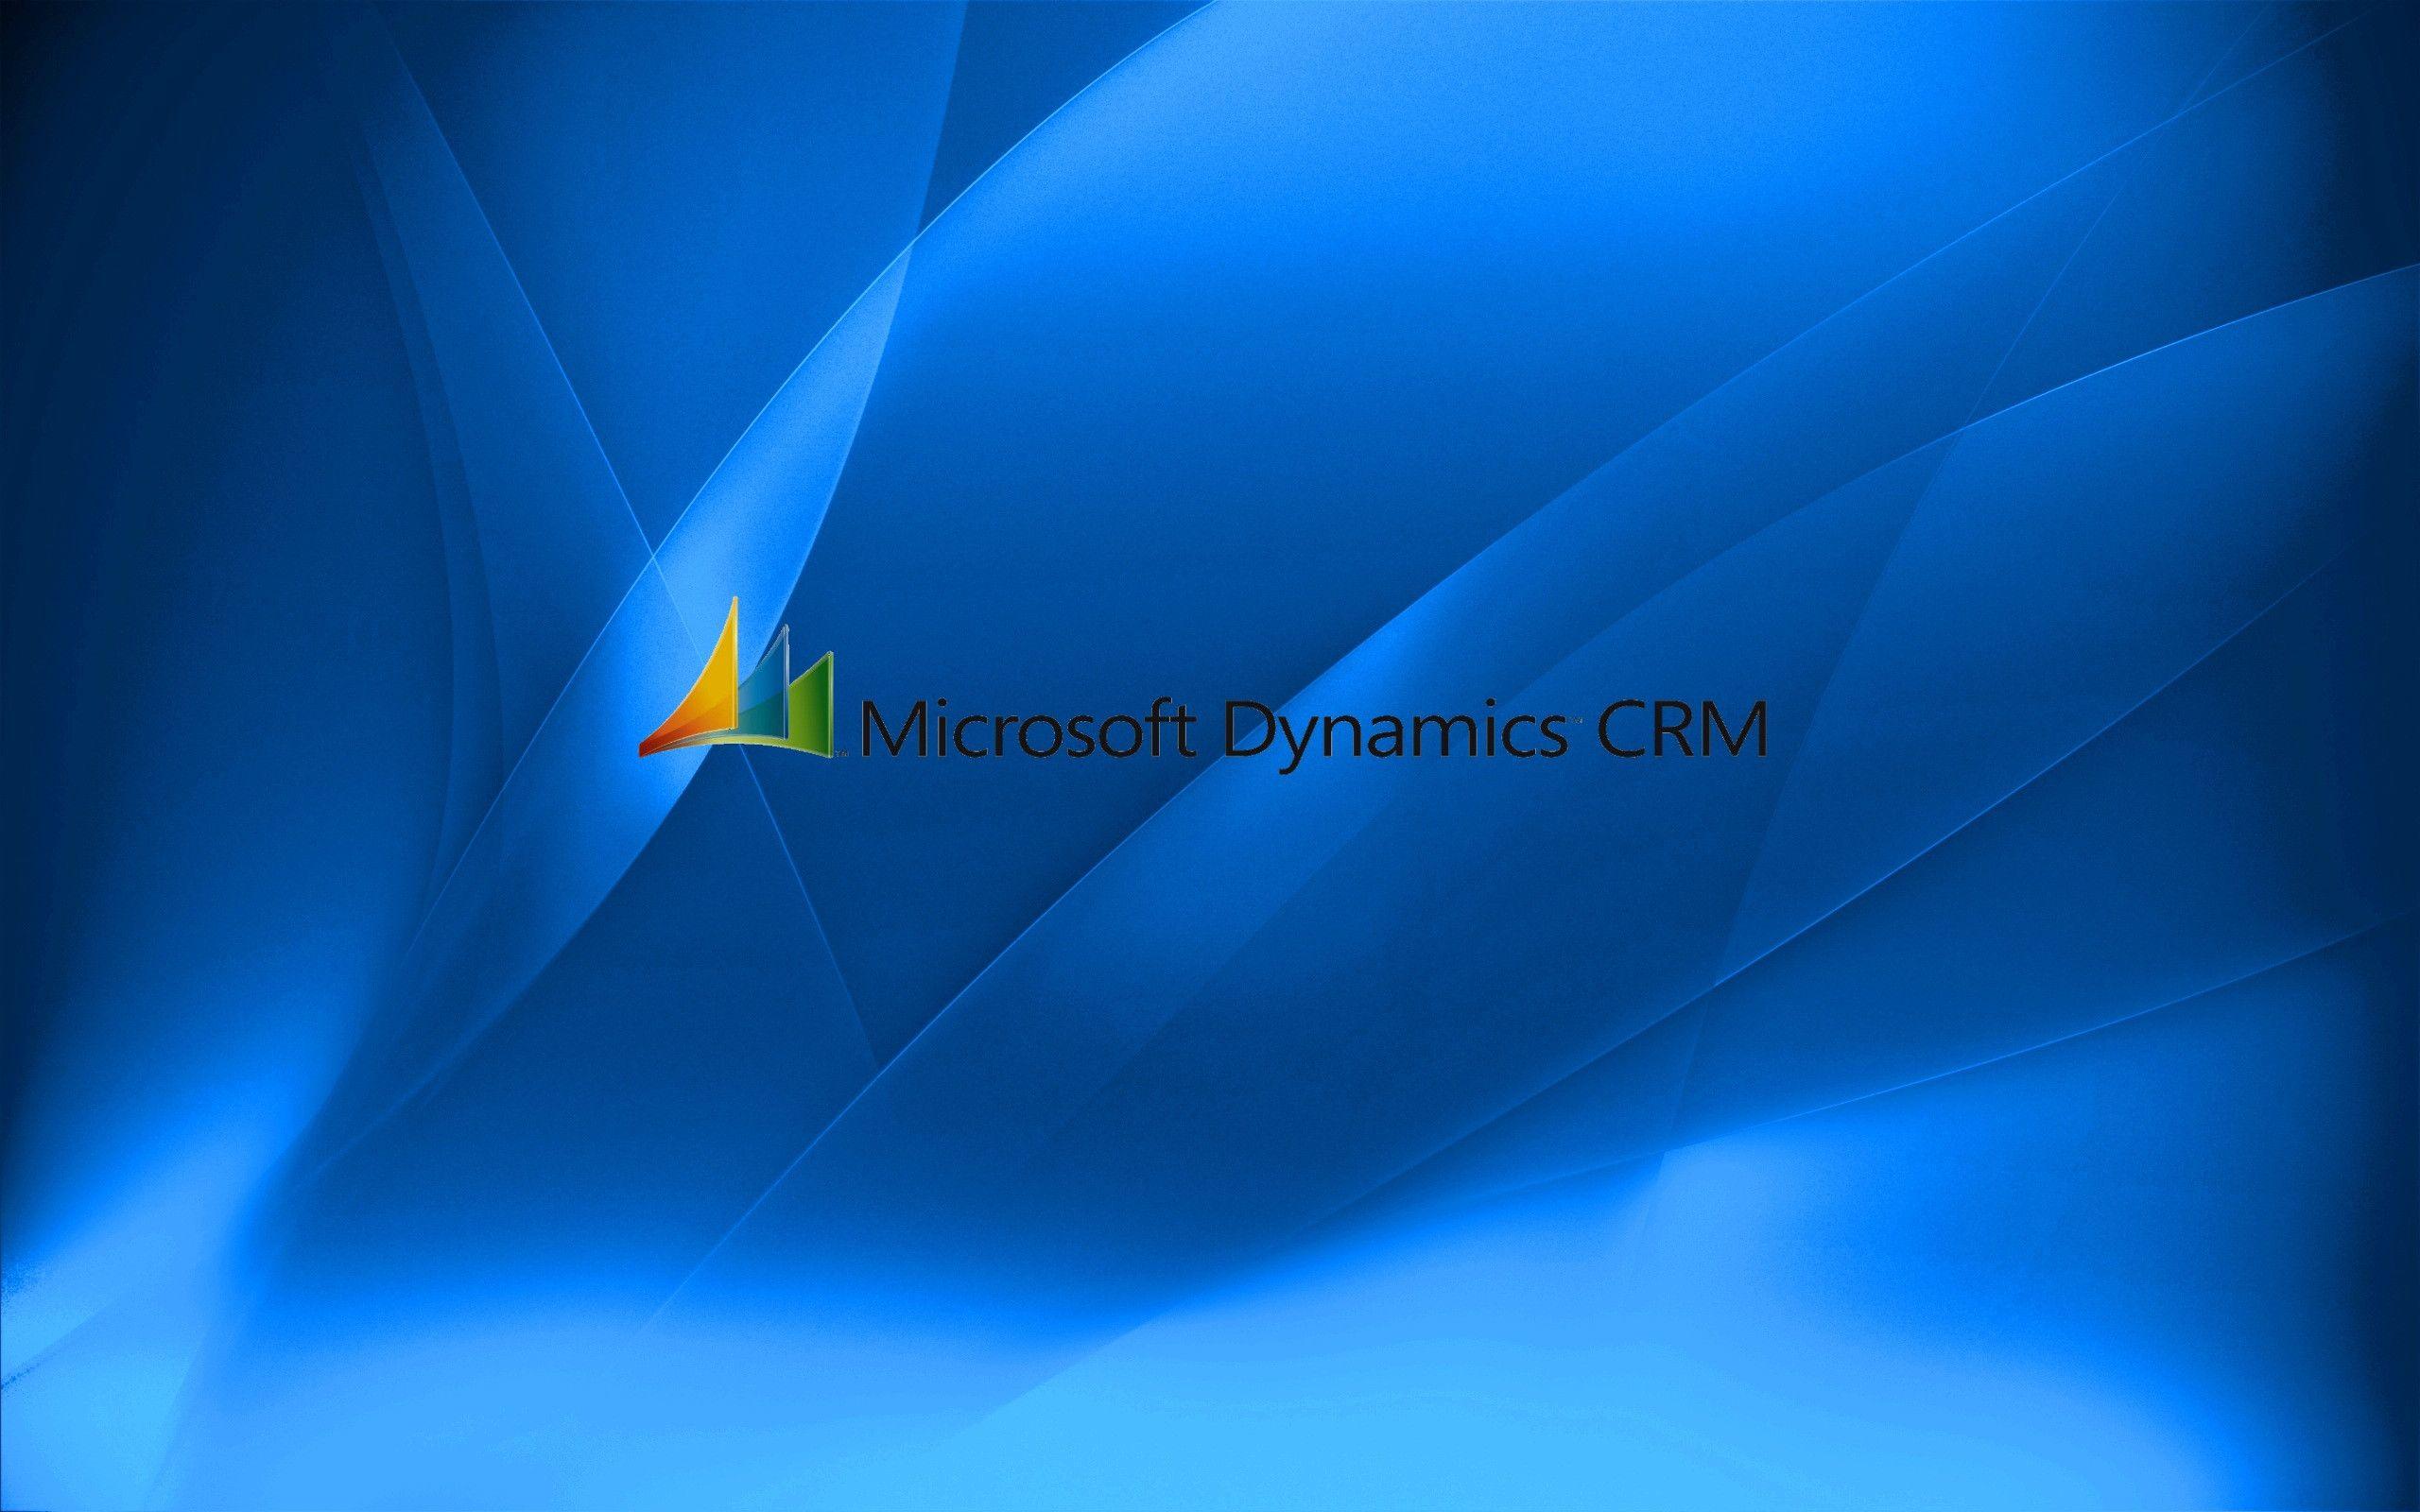 Got Windows 7? Download your free Microsoft Dynamics CRM Themes